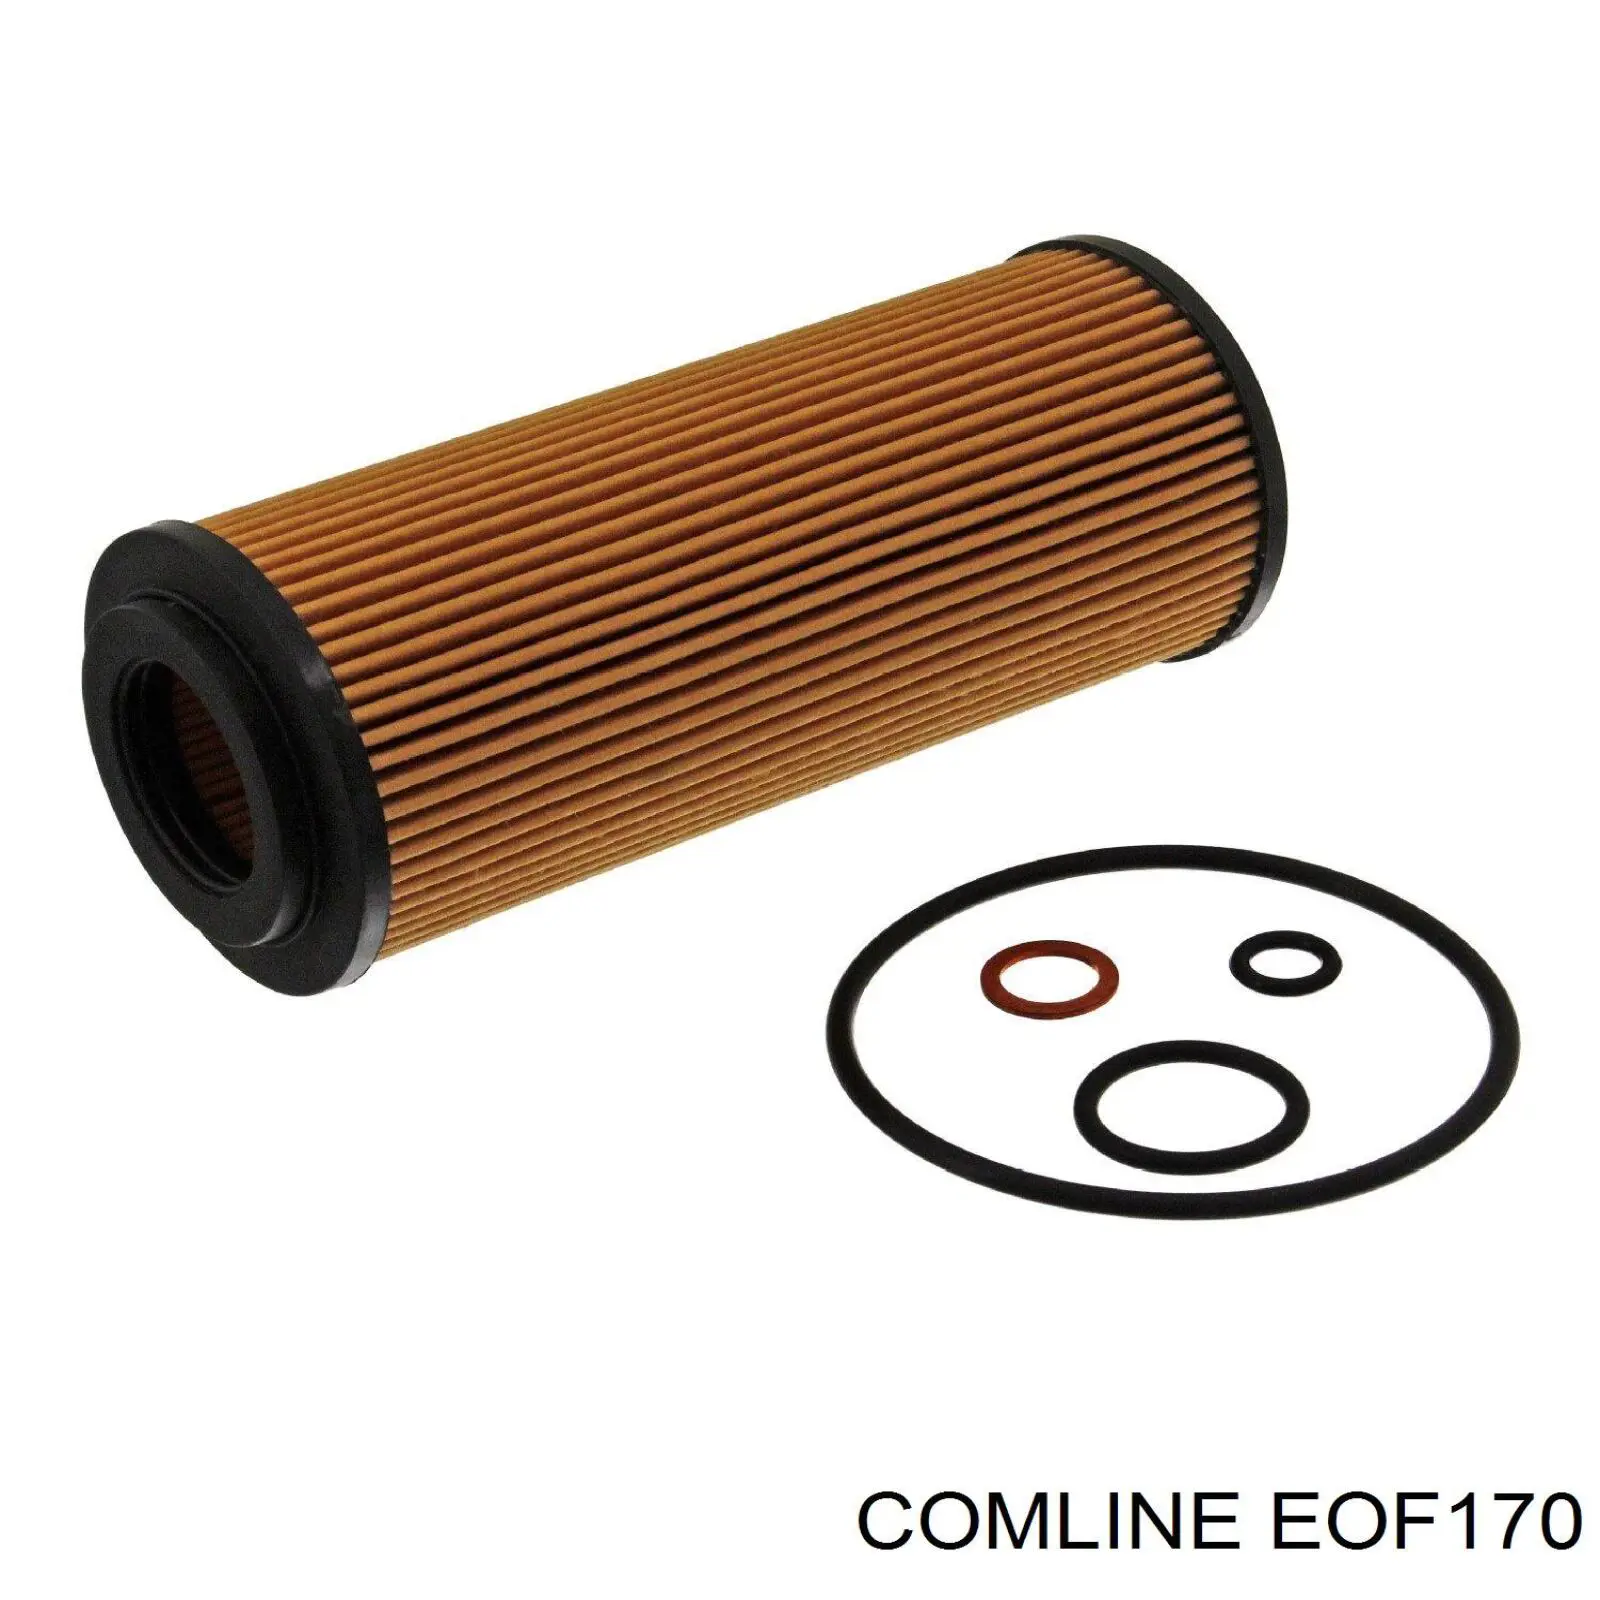 EOF170 Comline filtro de aceite